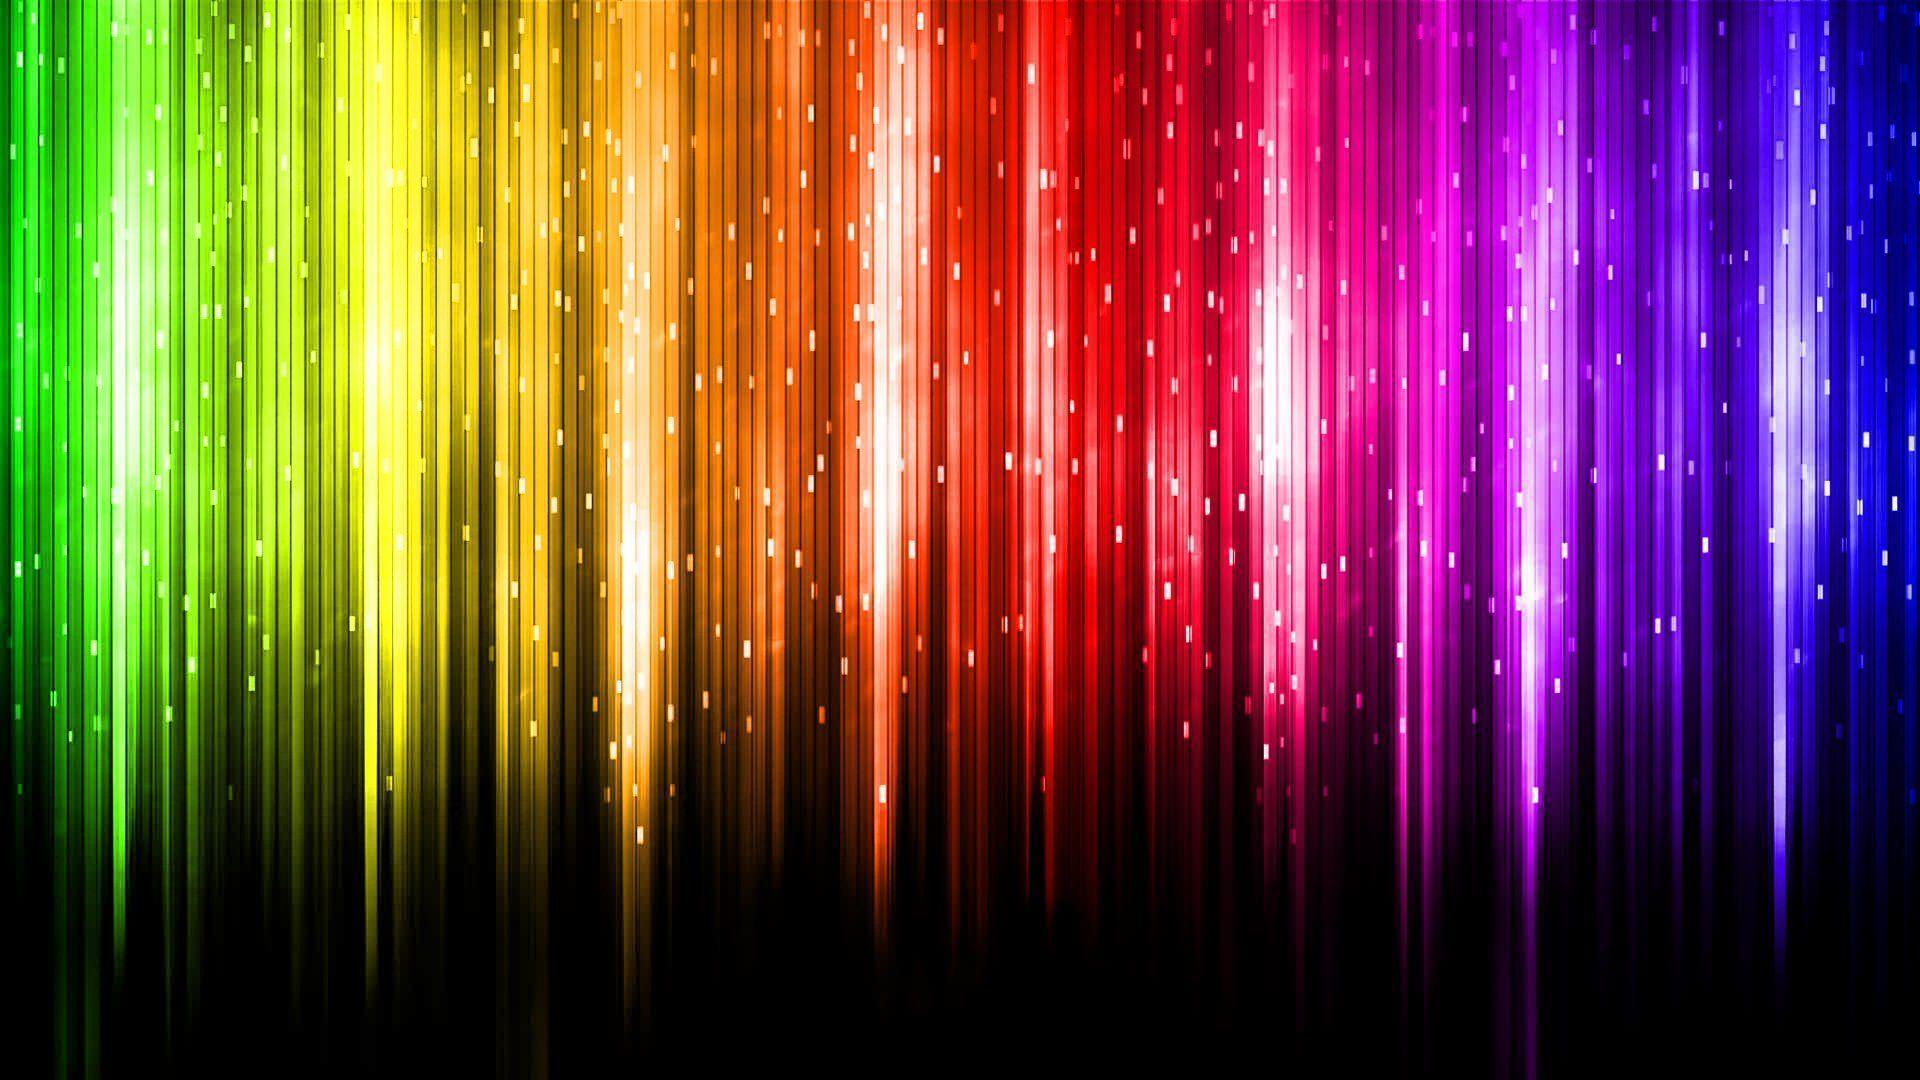 Download wallpaper: rainbow background, Rainbow, download photo